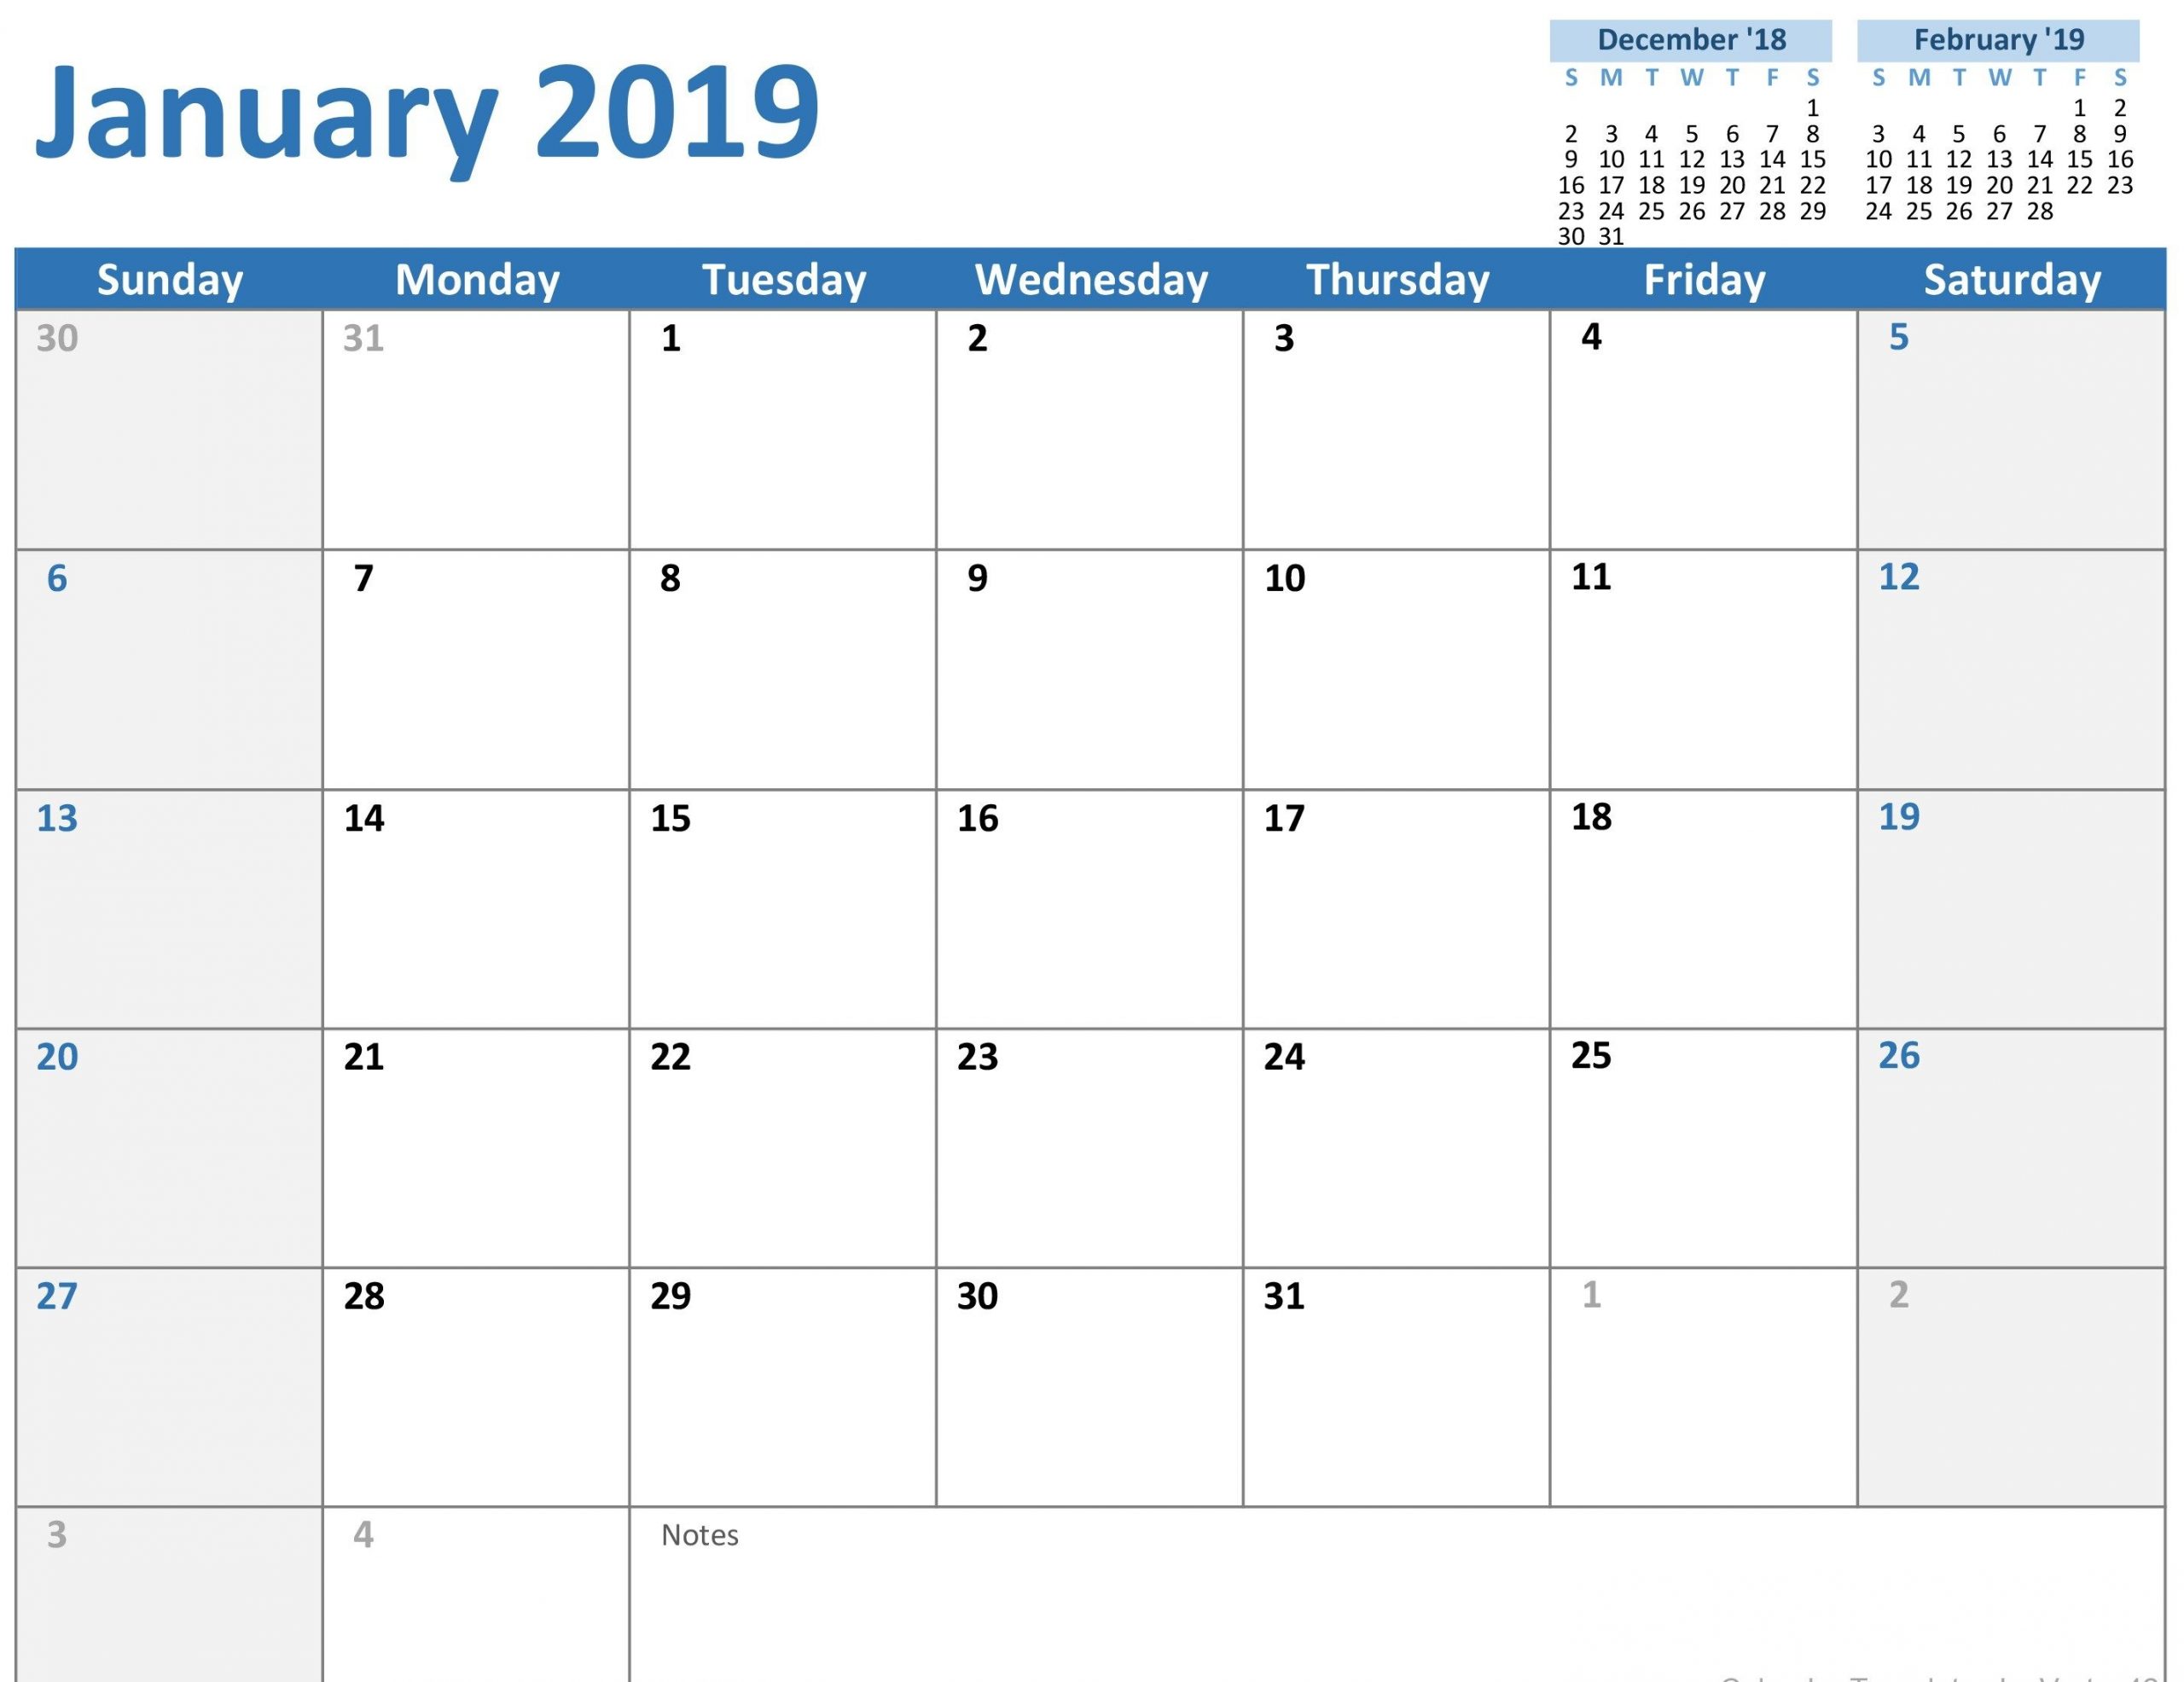 2020 Calender I Can Edit | Calendar Template Printable